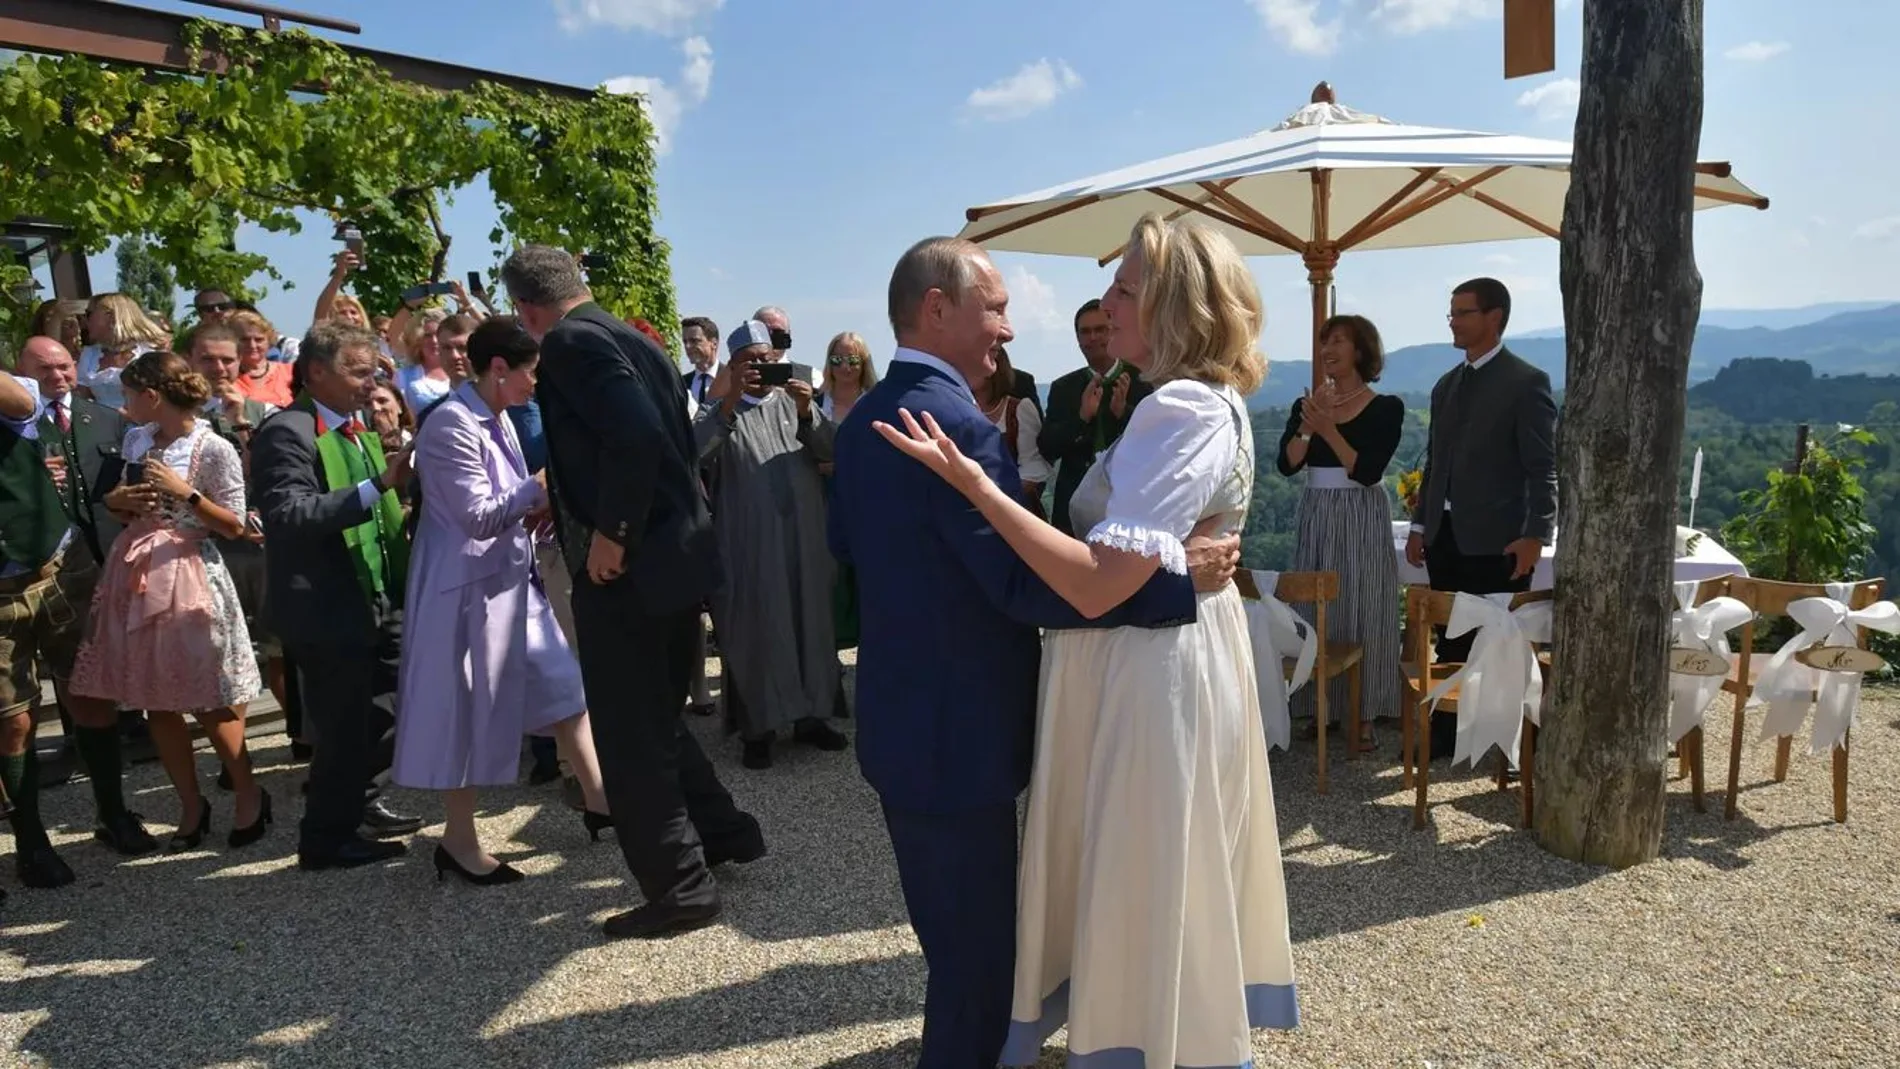 Austria's Foreign Minister Karin Kneissl dances with Russia's President Vladimir Putin at her wedding in Gamlitz, Austria, August 18, 2018.